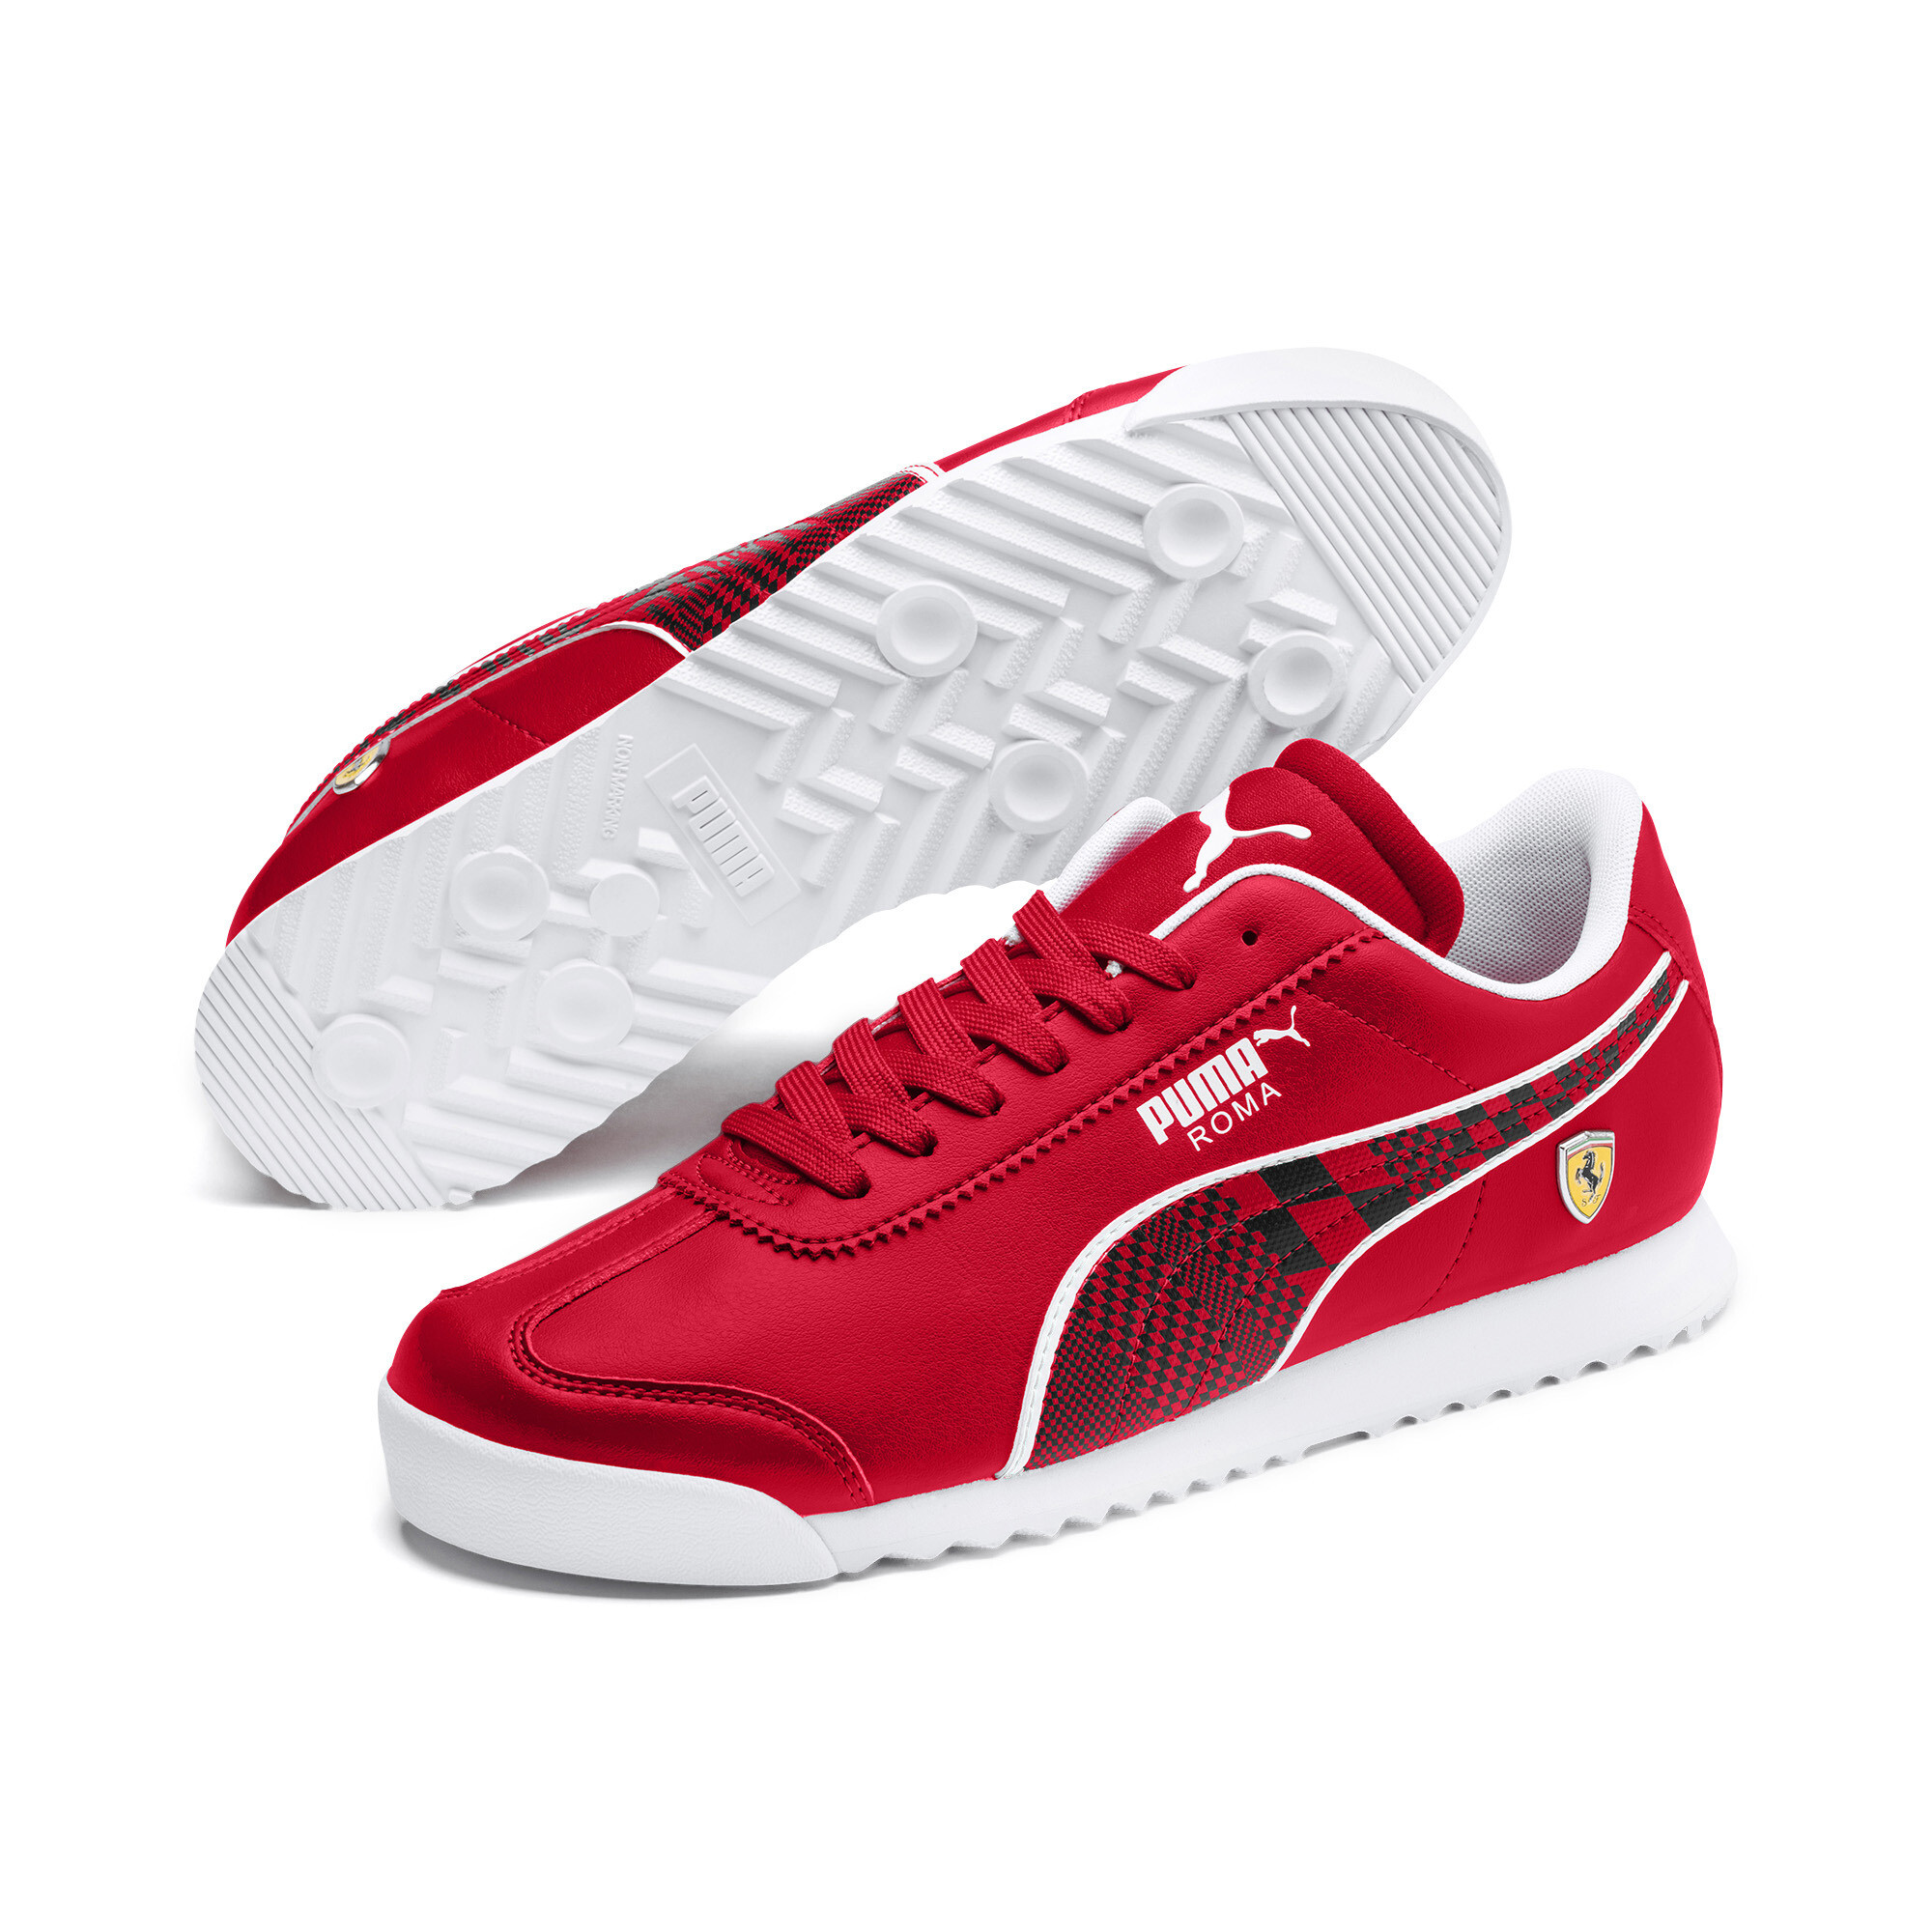 PUMA Scuderia Ferrari Roma Men's Sneakers Men Shoe Auto | eBay